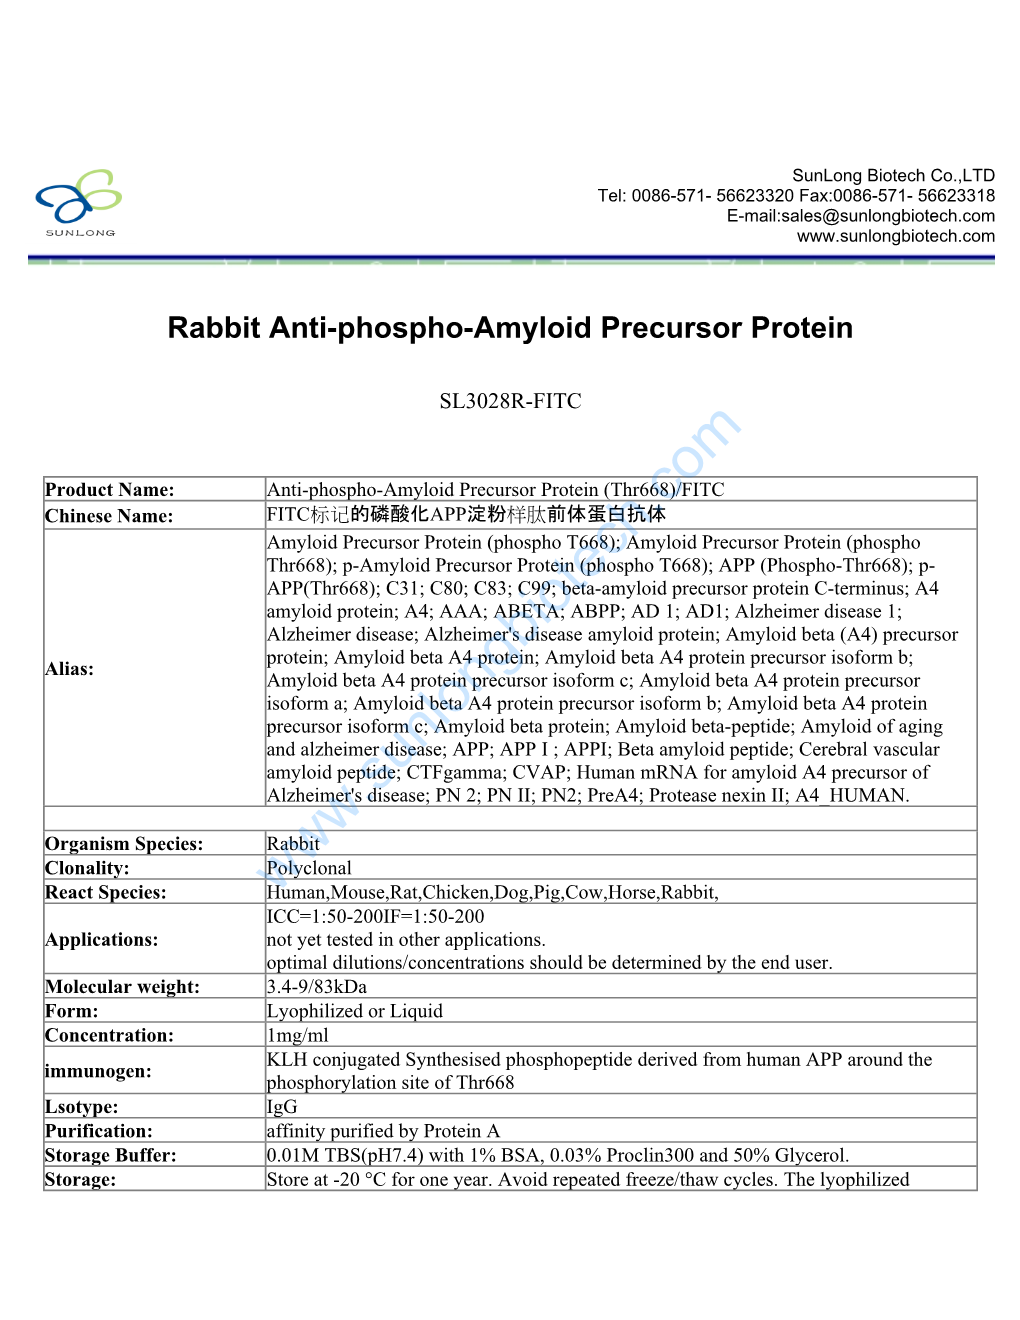 Rabbit Anti-Phospho-Amyloid Precursor Protein-SL3028R-FITC